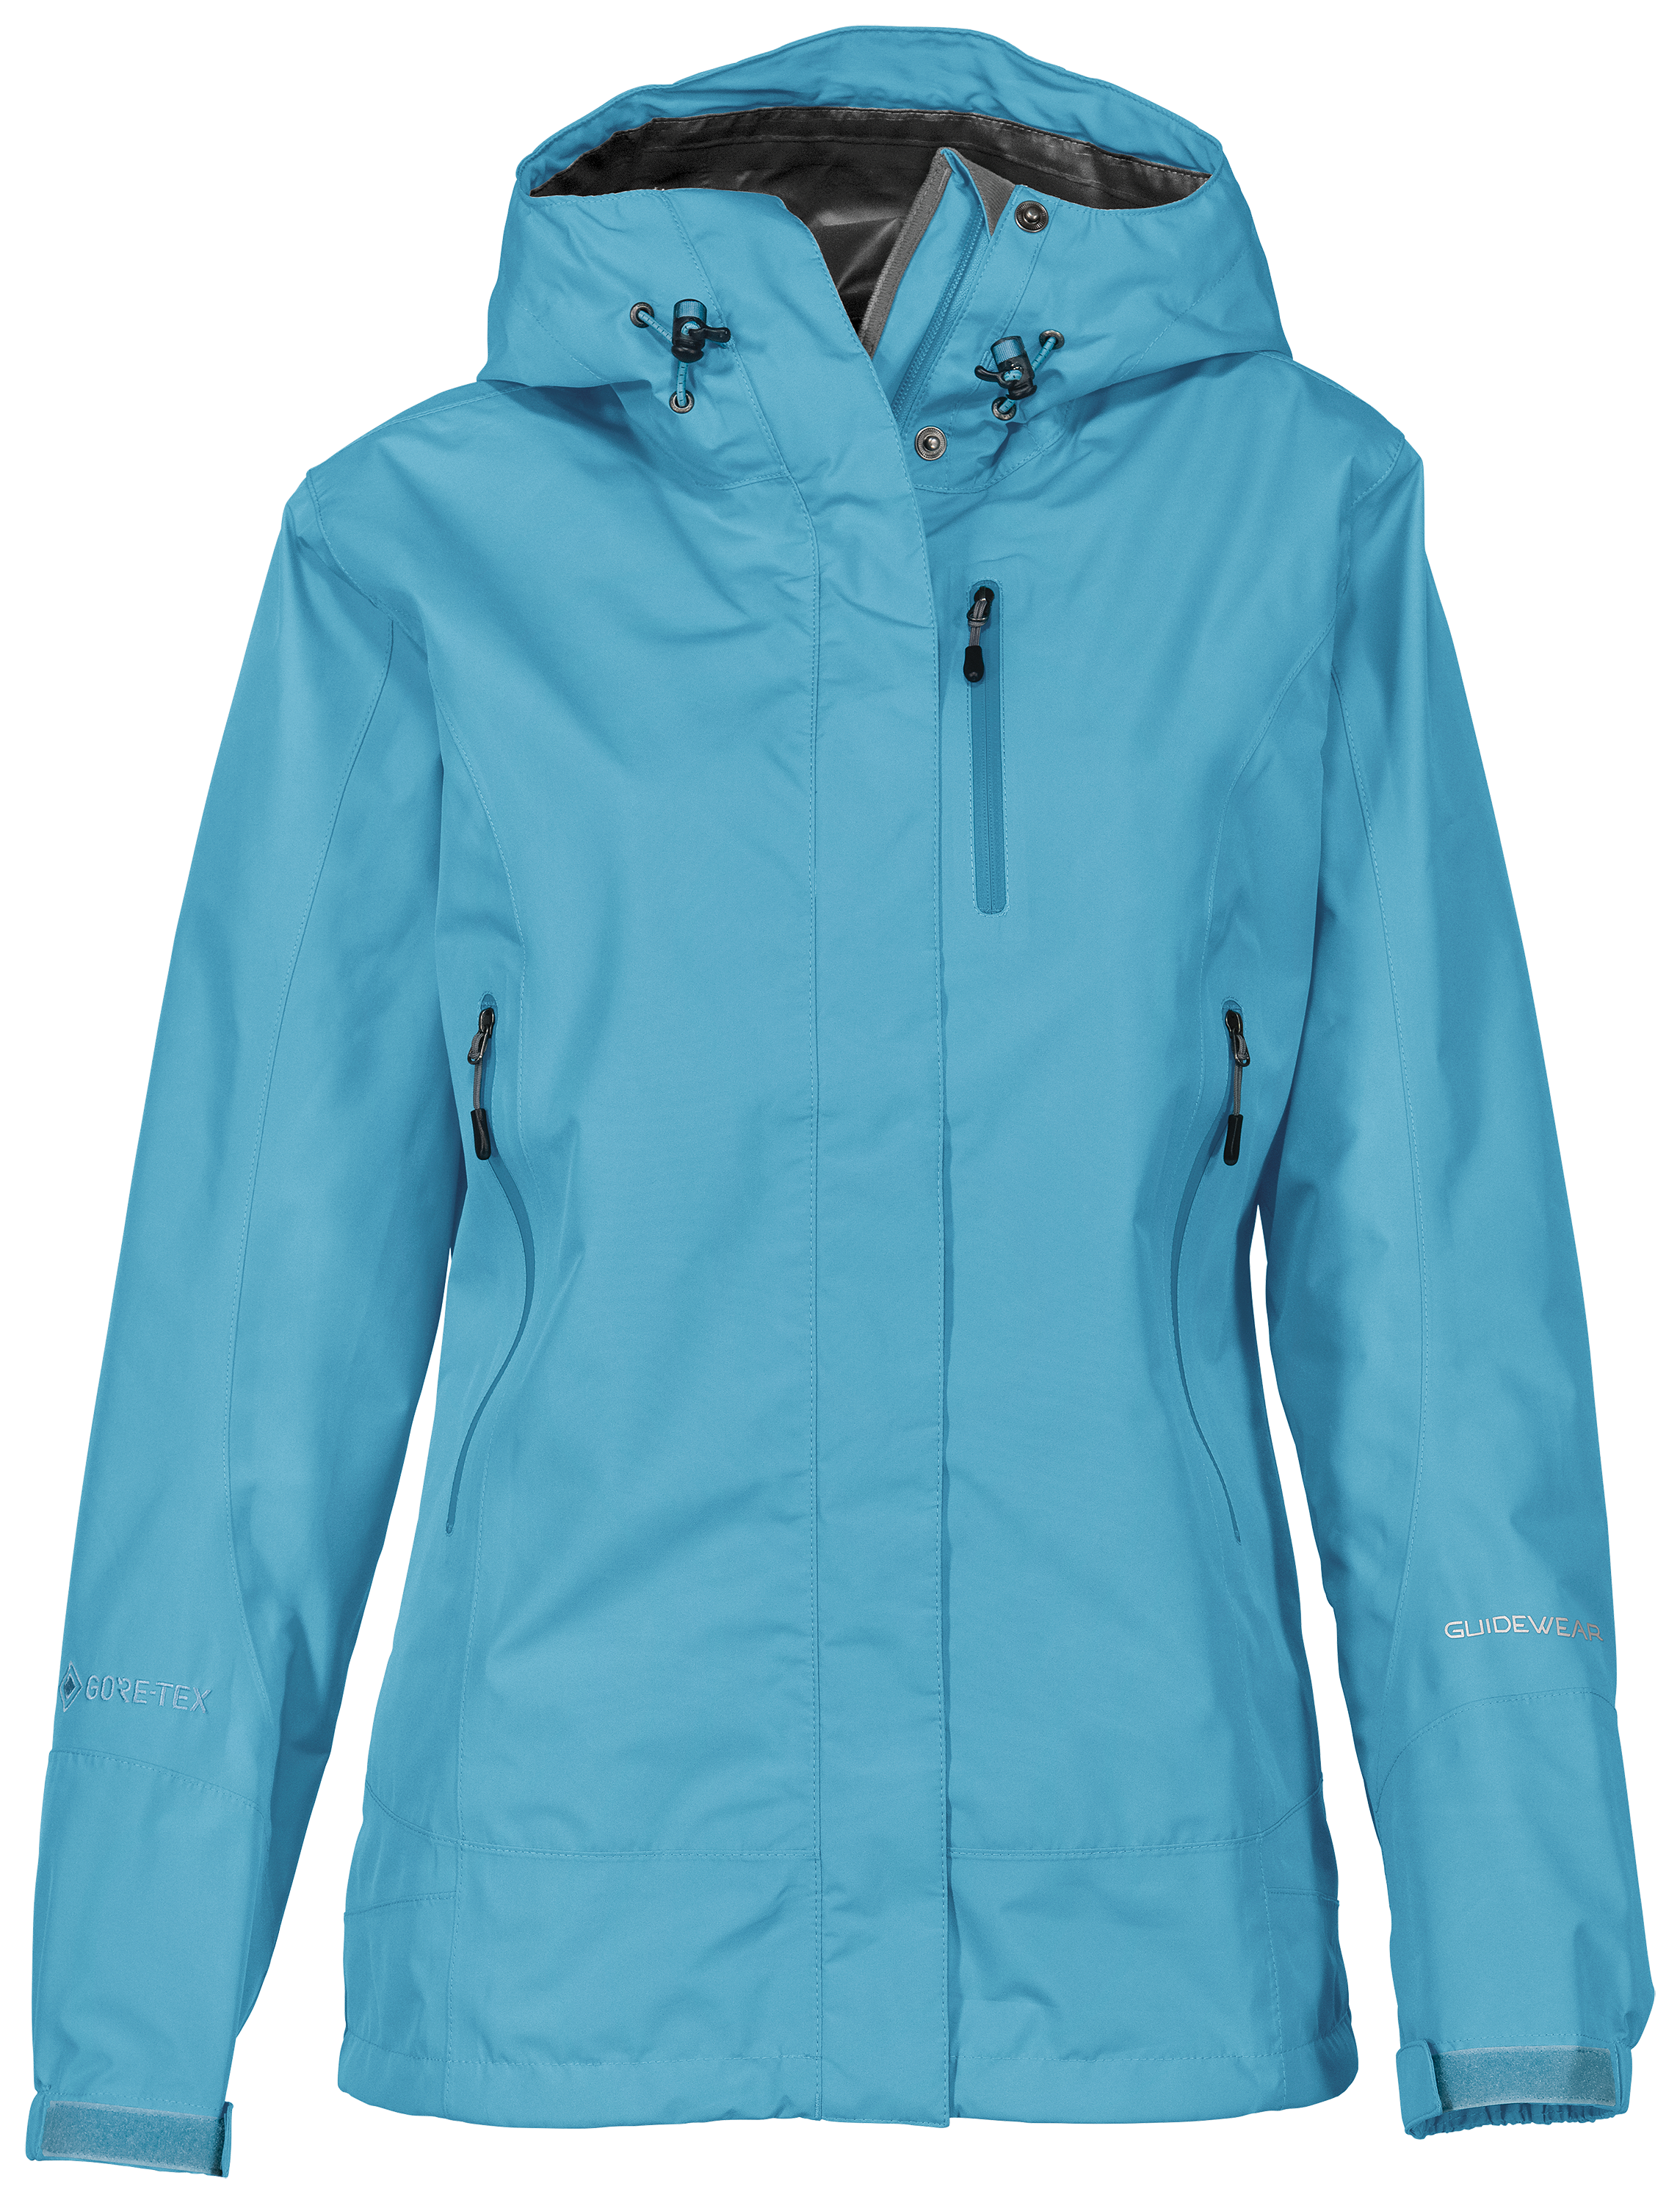 Johnny Morris Bass Pro Shops Guidewear Rainy River Jacket with GORE-TEX PacLite for Ladies - Delphinium Blue - S